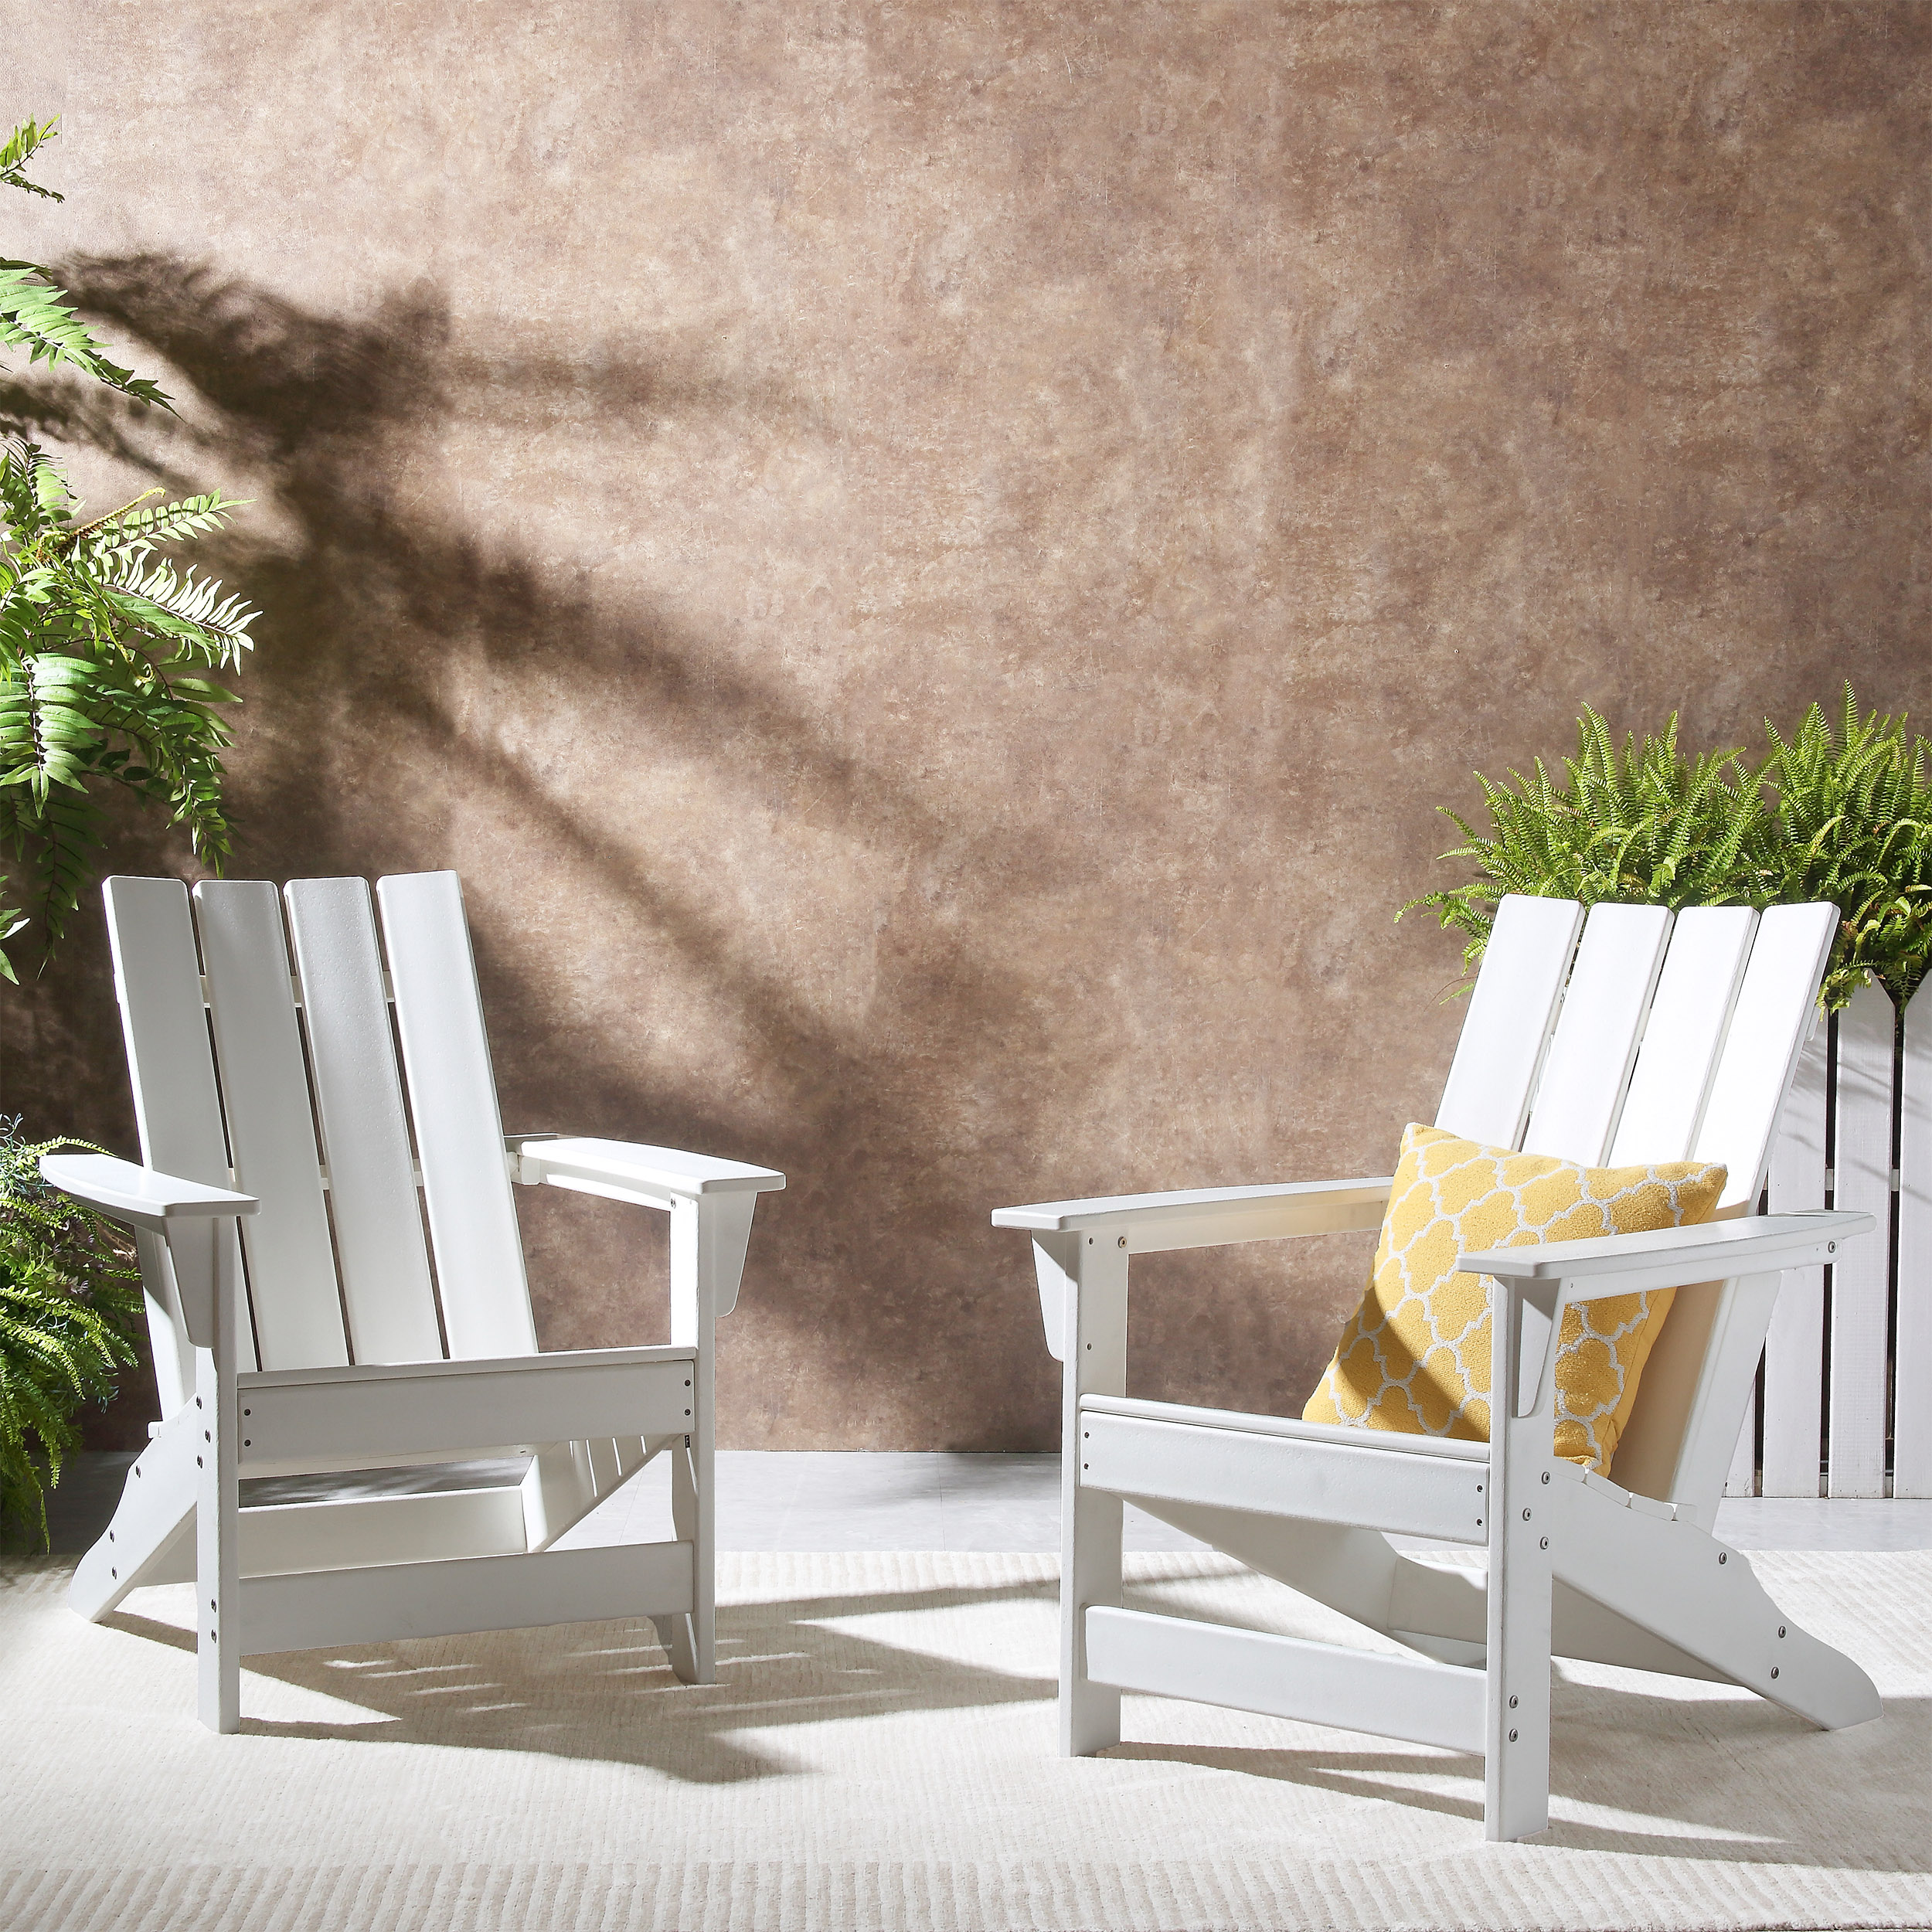 Panagiota Outdoor Contemporary Adirondack Chair, Set of 2, White - image 2 of 12